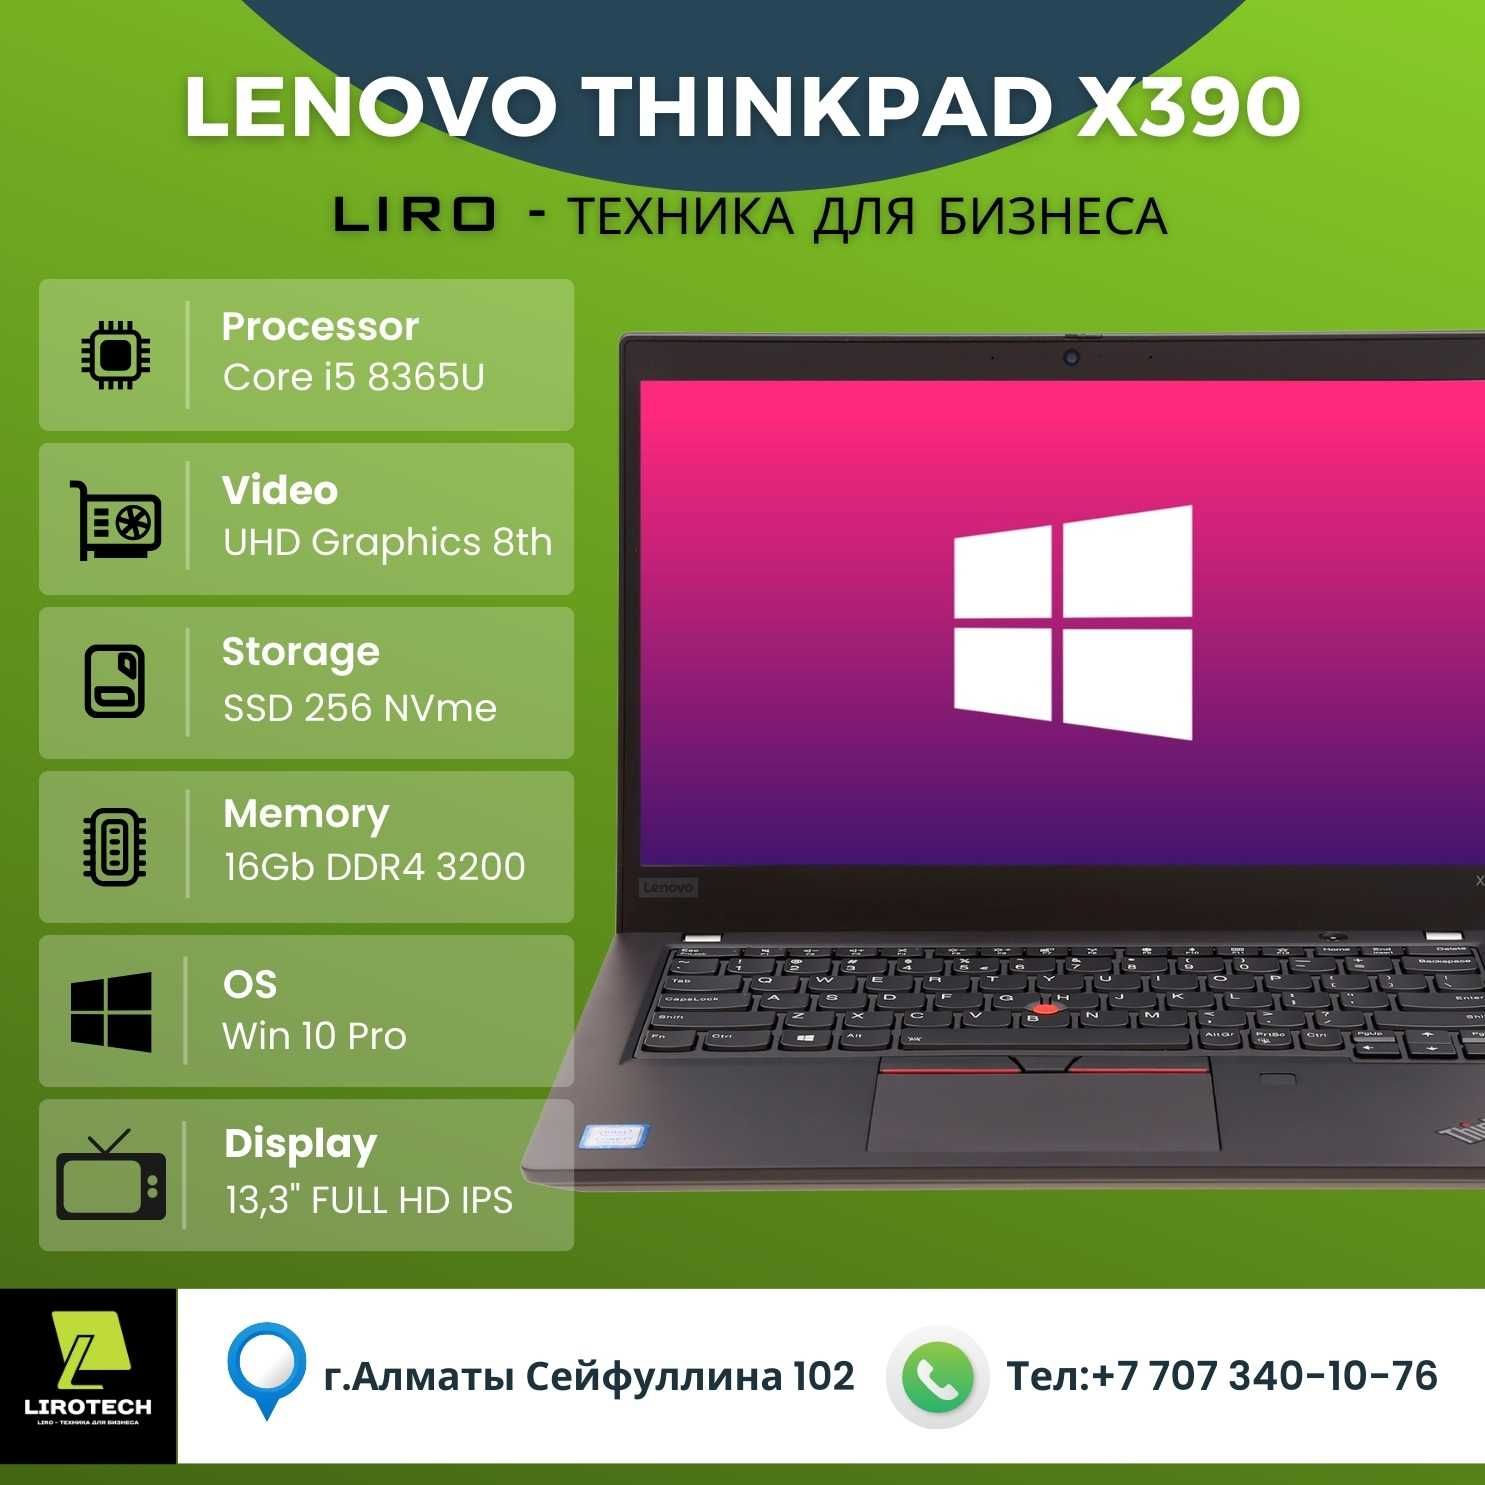 Ноутбук Lenovo Thinkpad X390 (Core i5 8365U -1.6/4.1 GHZ 4/8).